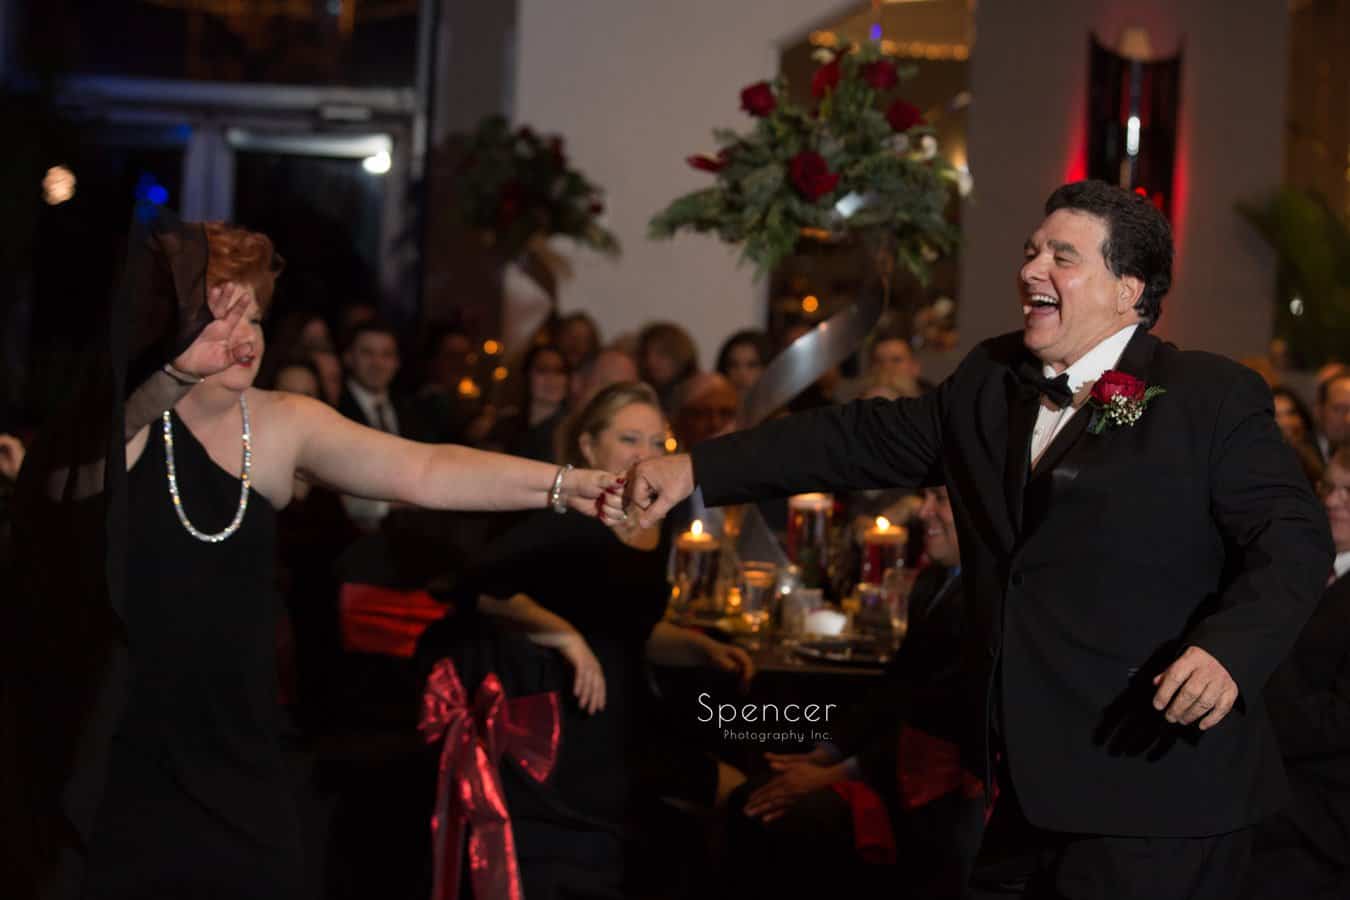 brides parents dance at wedding reception at landerhaven